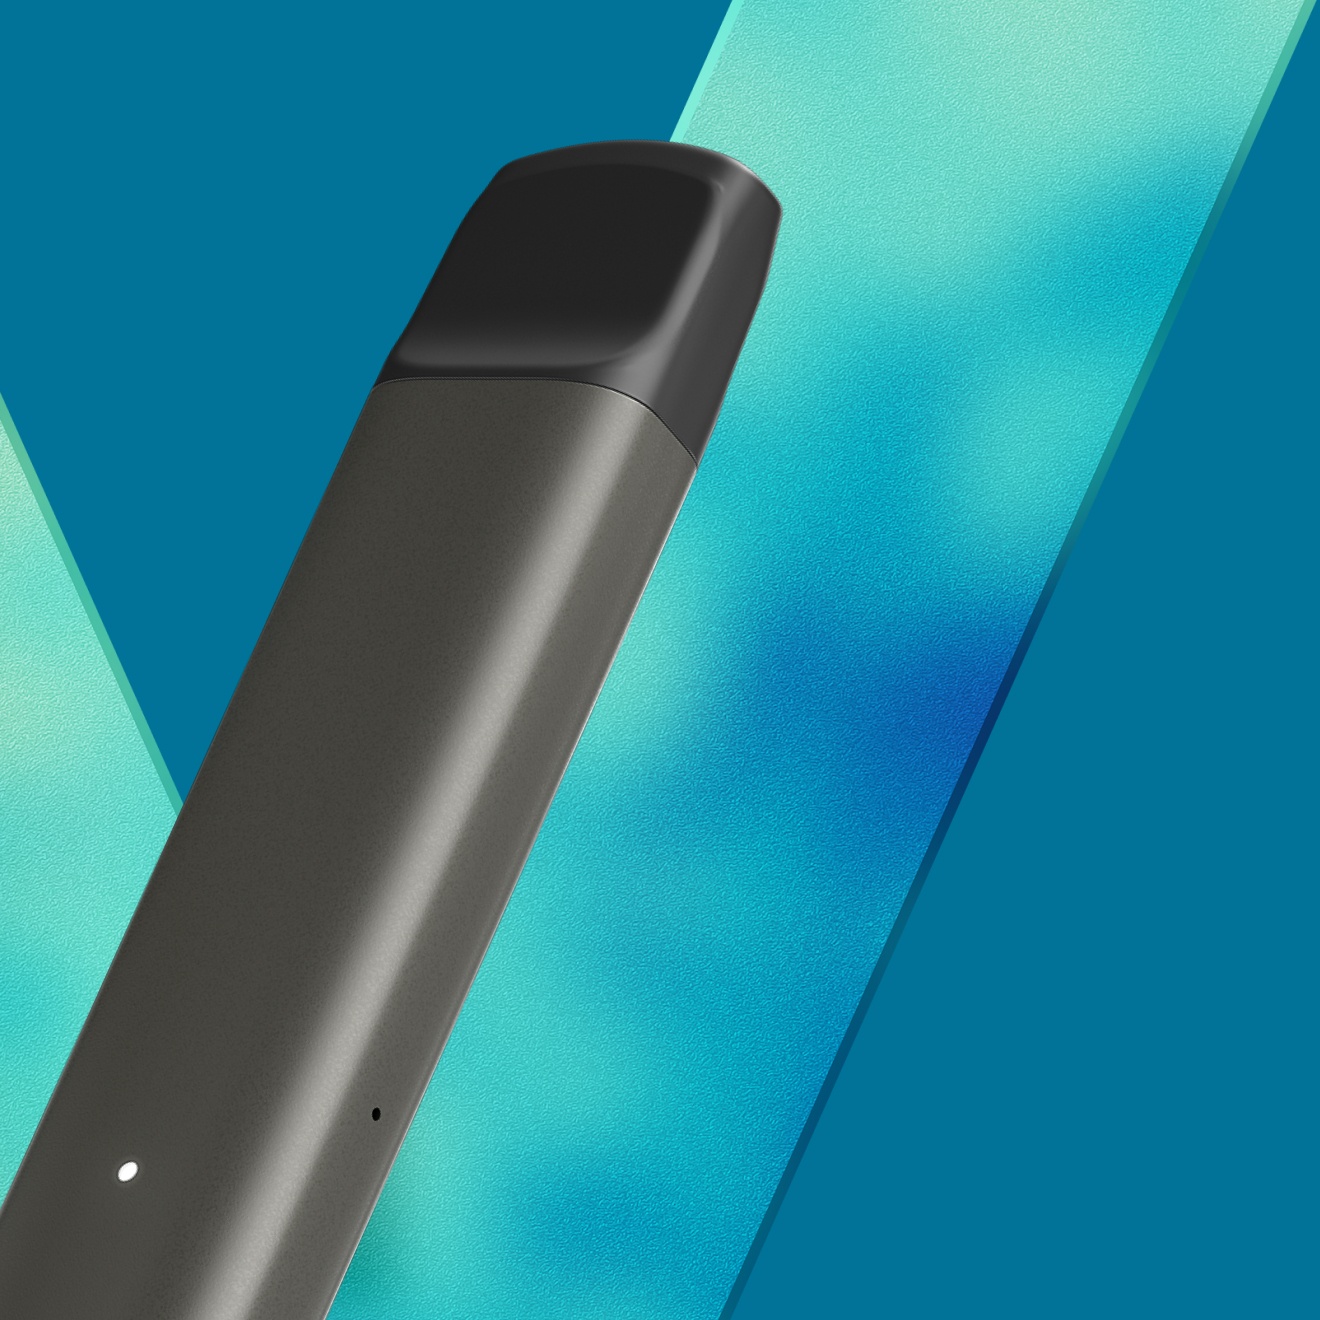 VEEV NOW disposable e-cigarette on a blue V background